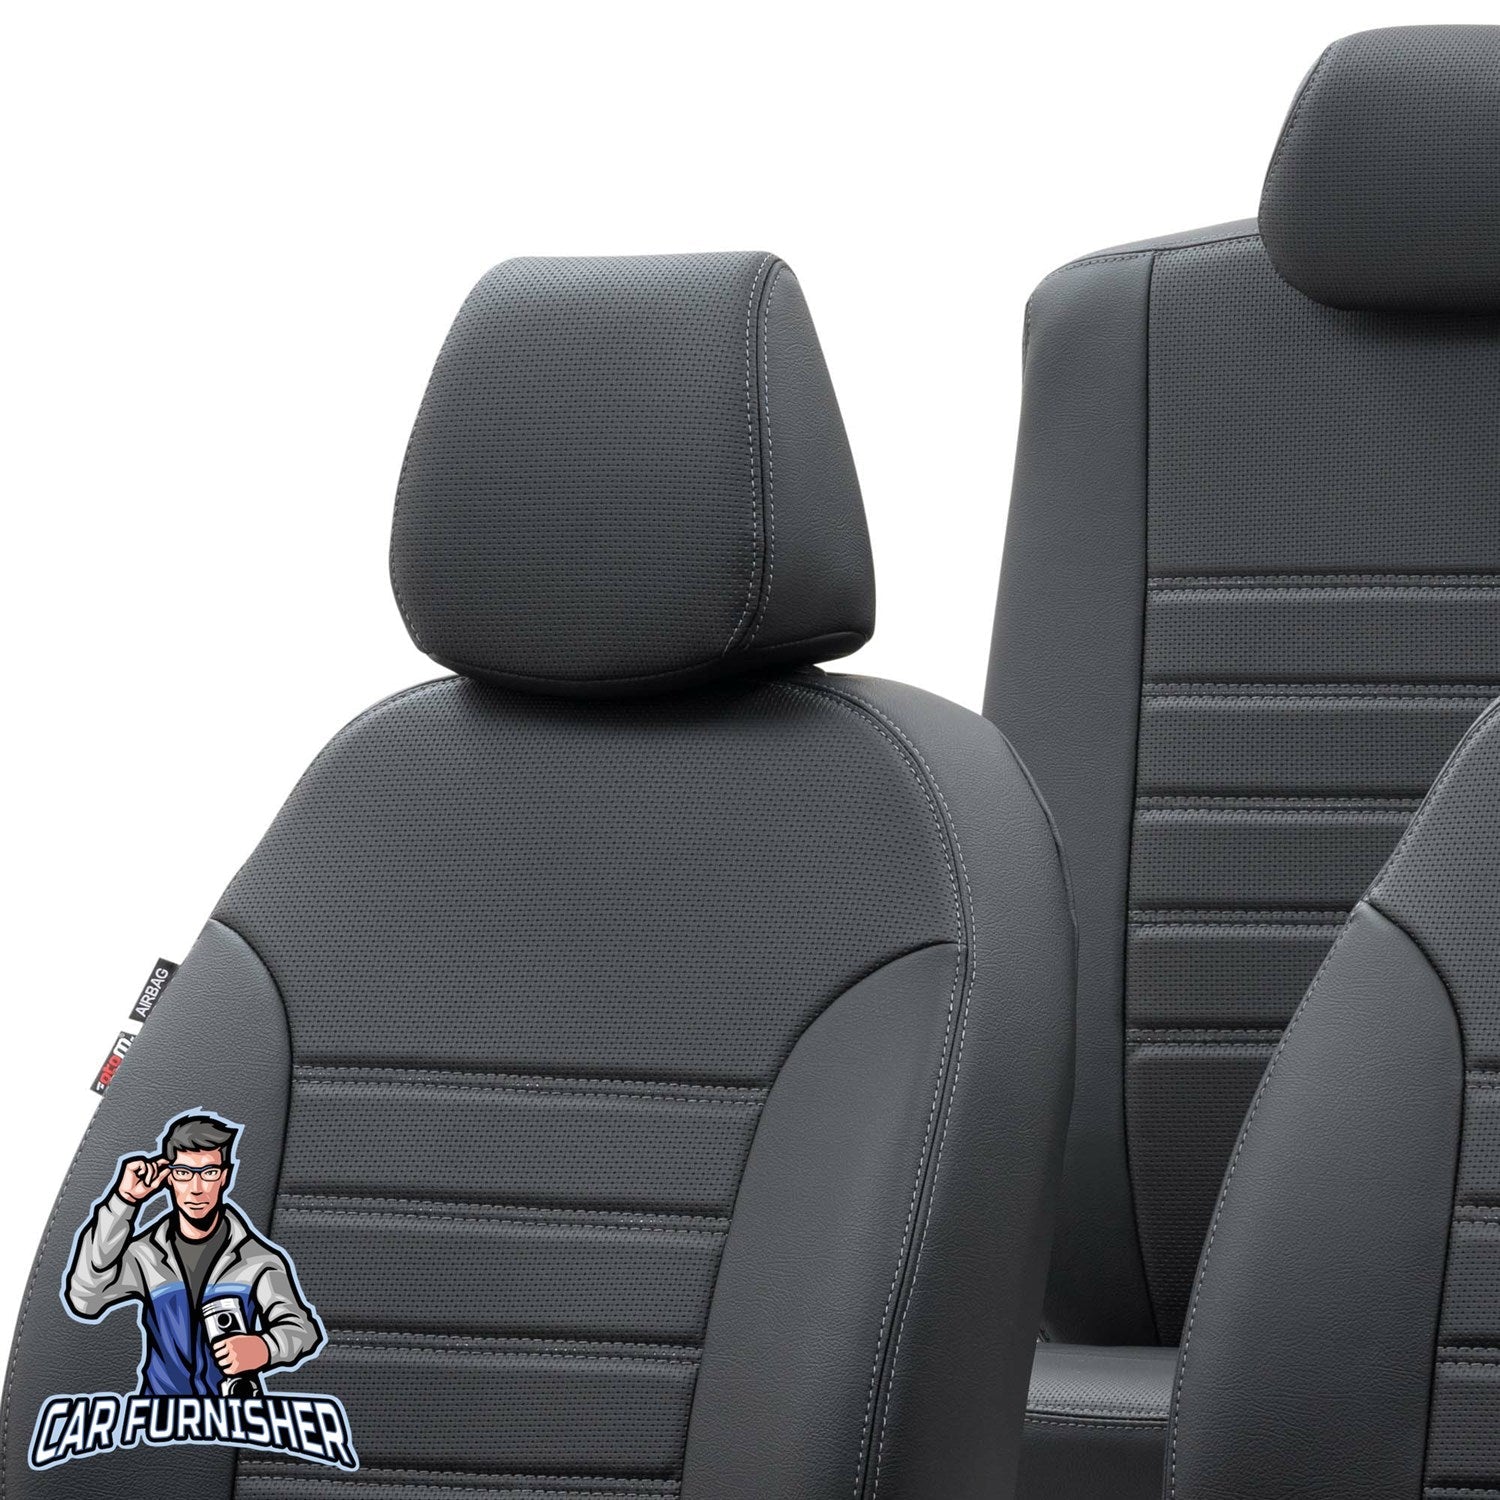 Fiat Linea Car Seat Covers 2007-2017 New York Design Black Full Set (5 Seats + Handrest) Leather & Fabric